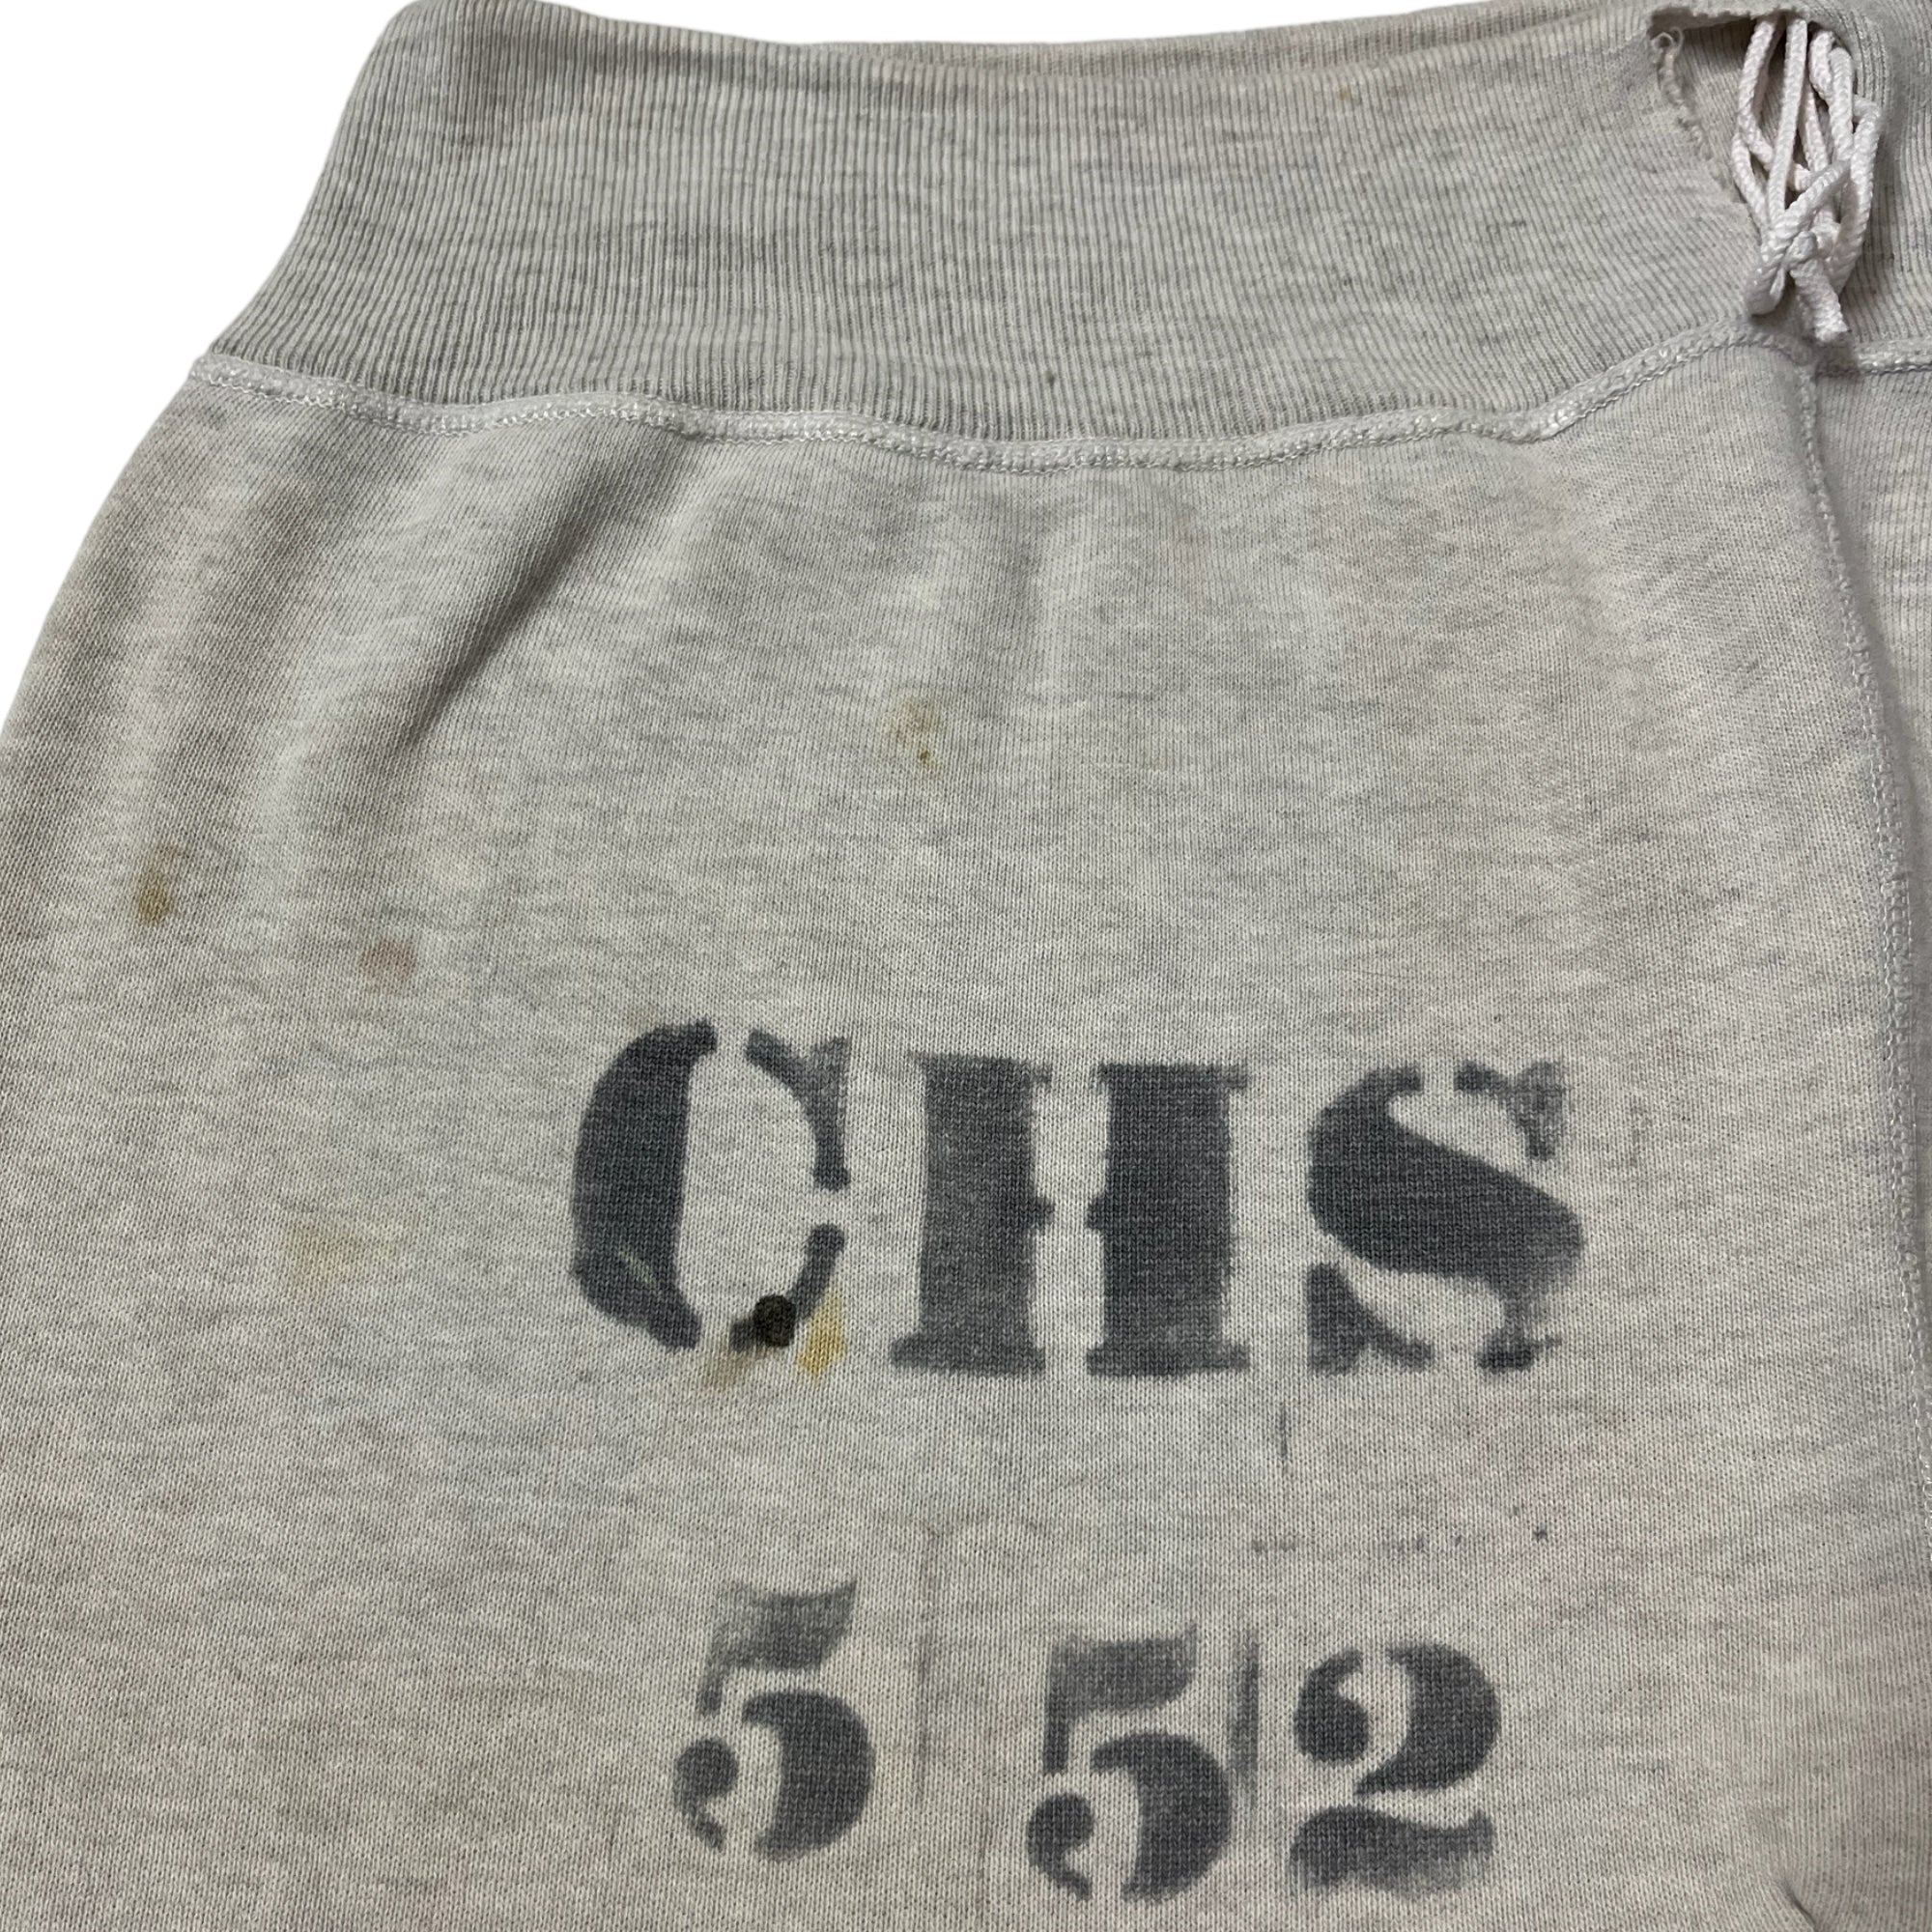 1960s Prisoner Sweatpants ‘Correctional Health Services’ - Light Heather Grey - Adjustable/34x29